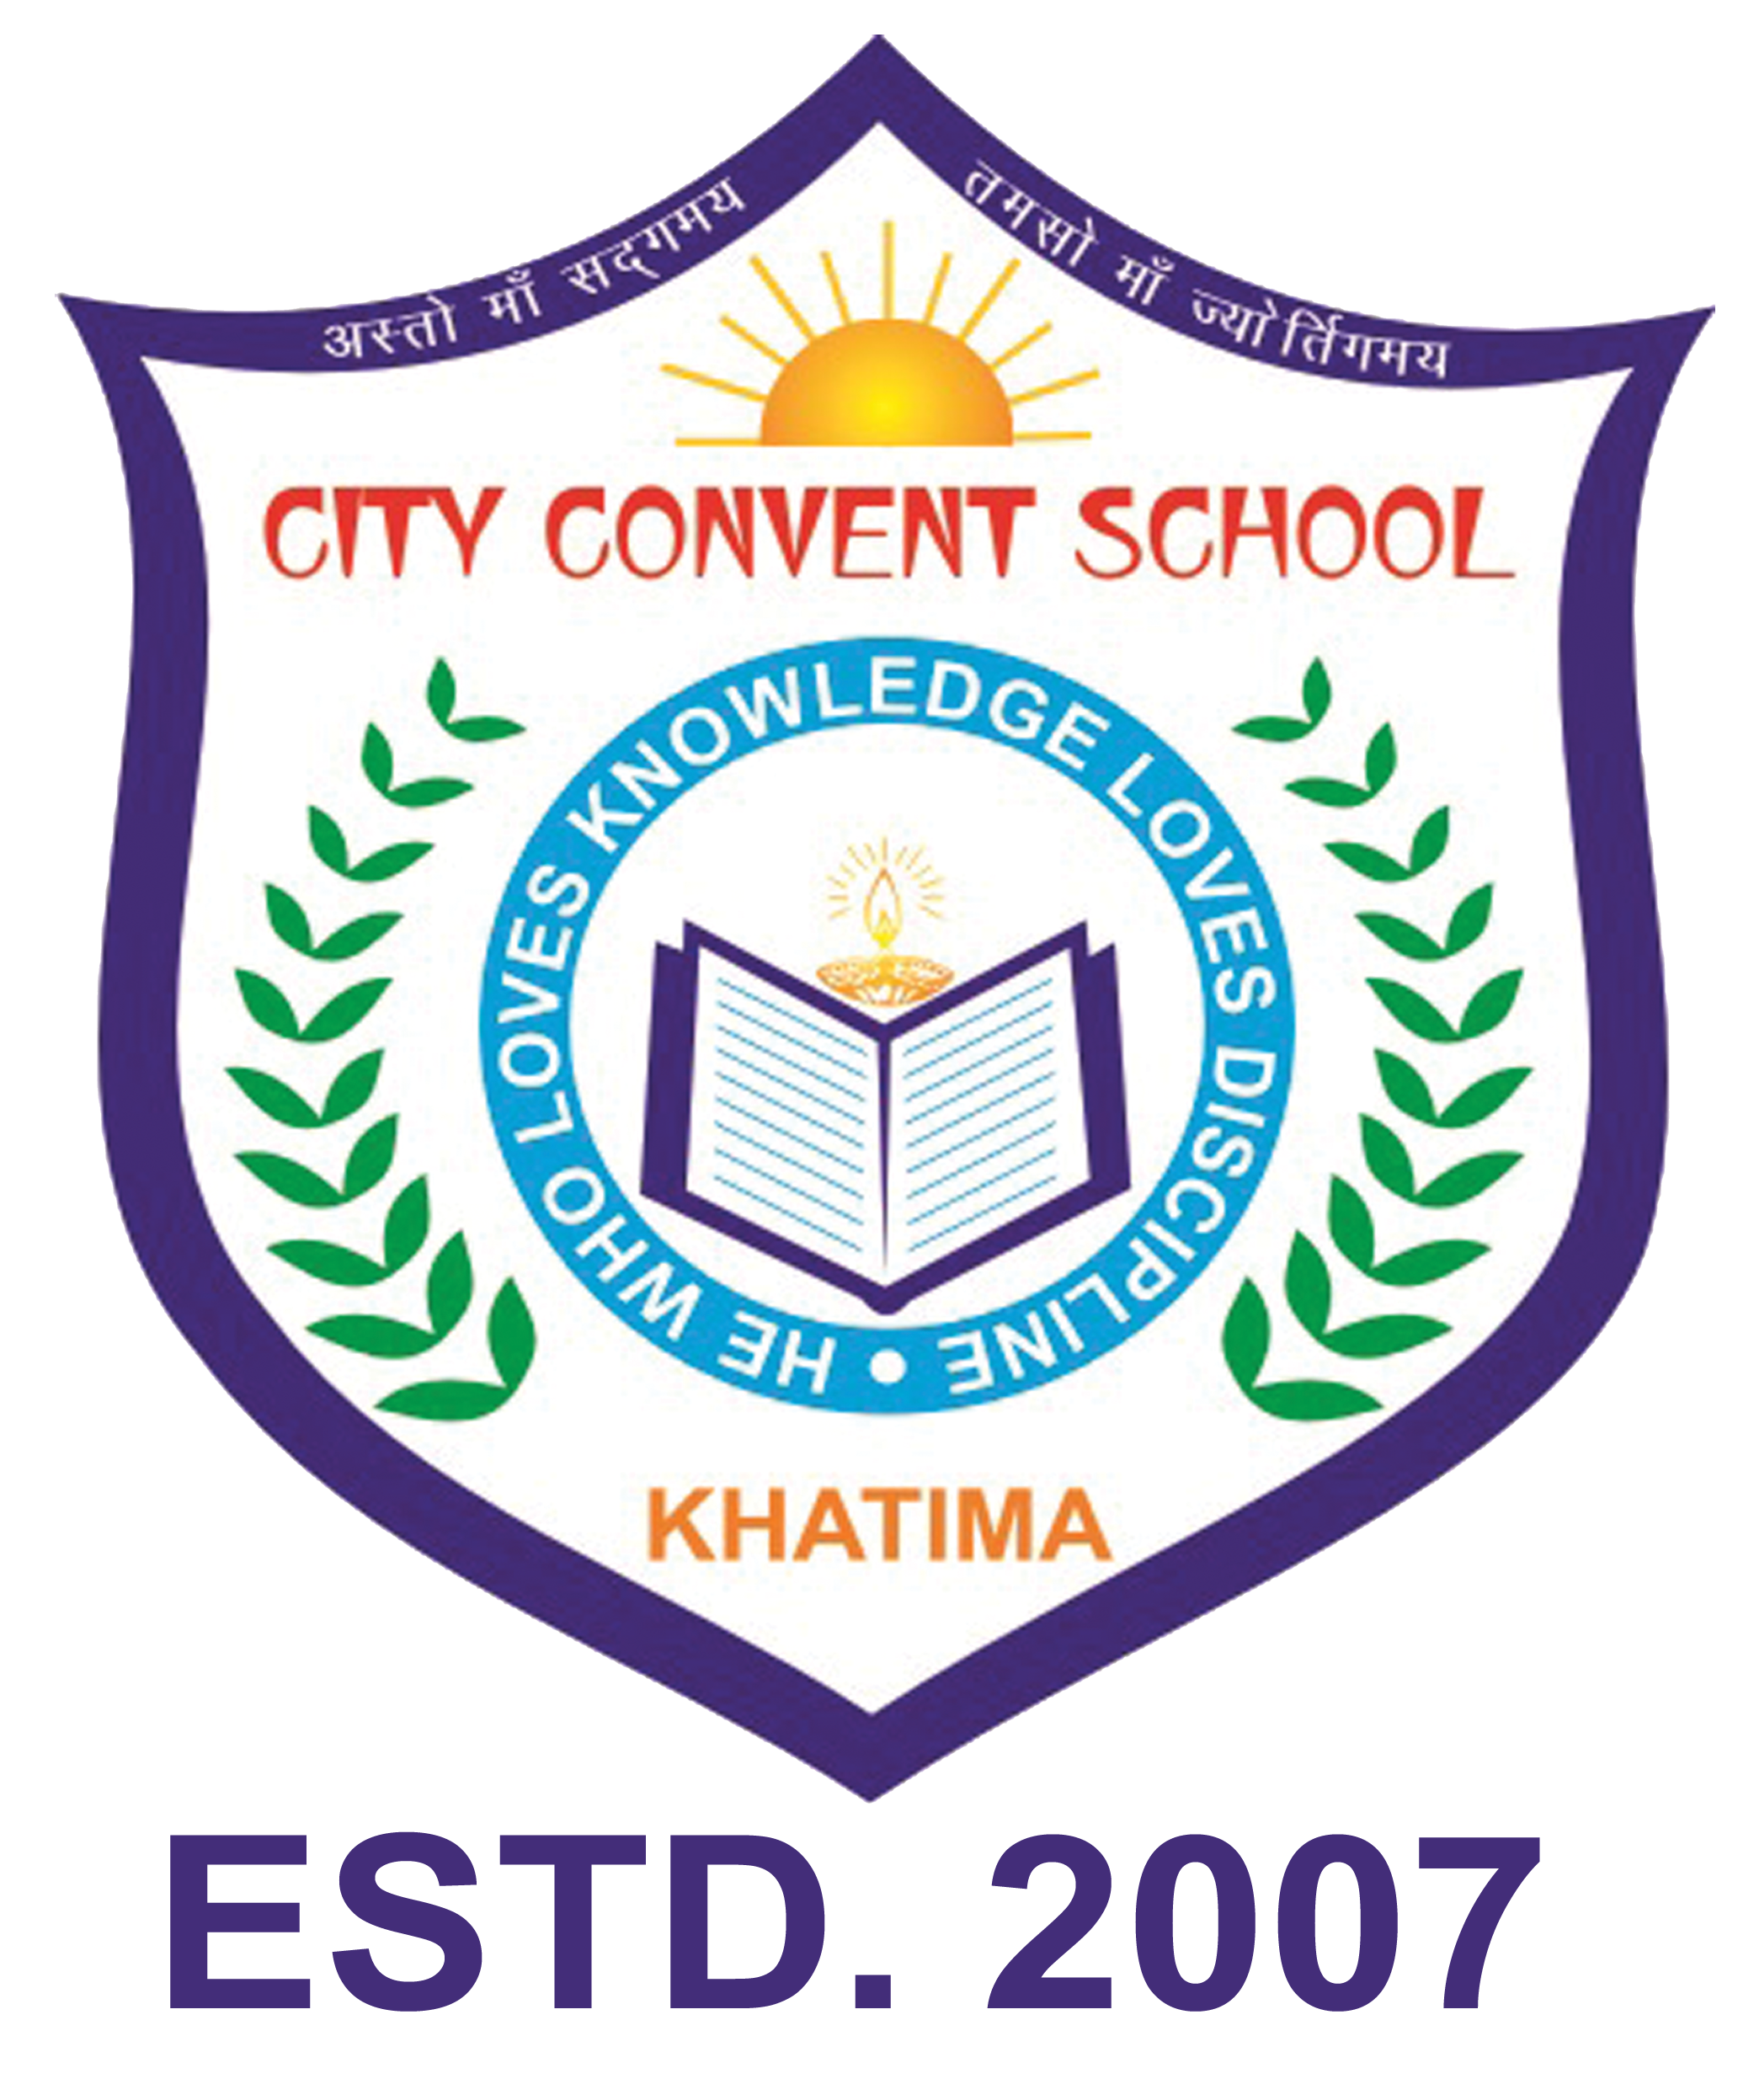 City Convent School|Schools|Education